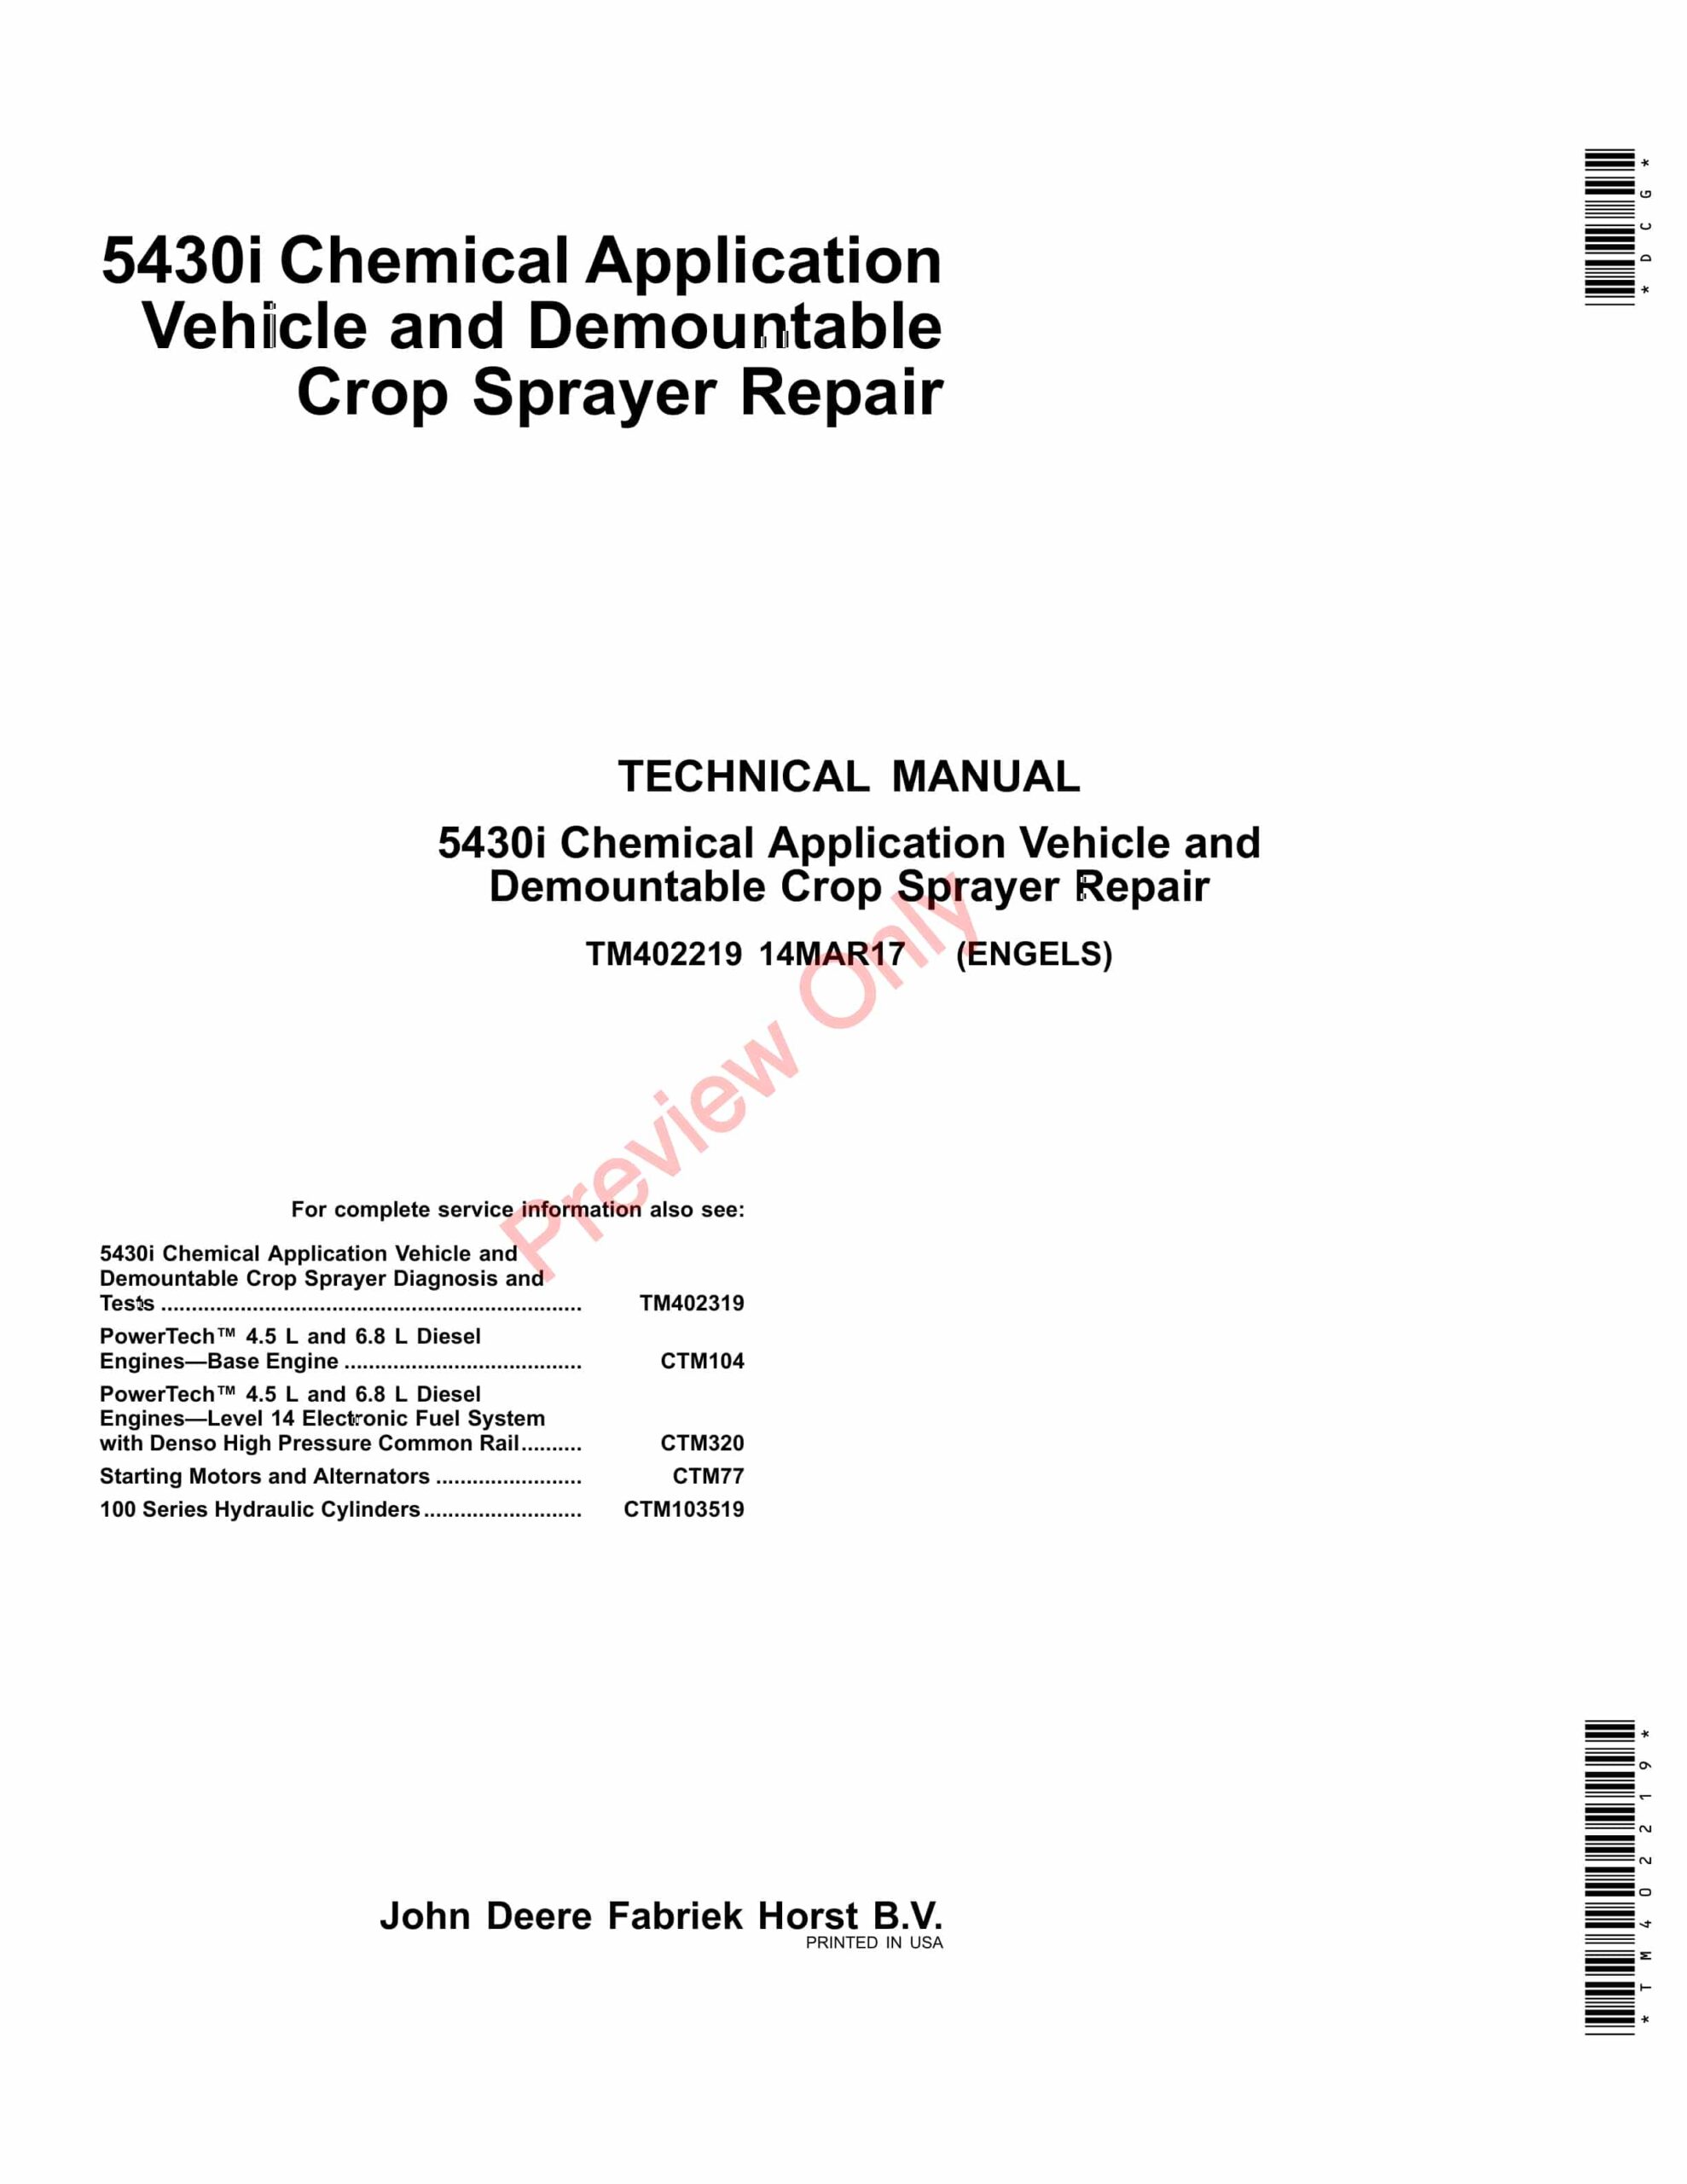 John Deere 5430i Chemical Application Vehicle and DemountableCrop Sprayer Service Information TM402219 14MAR17-1